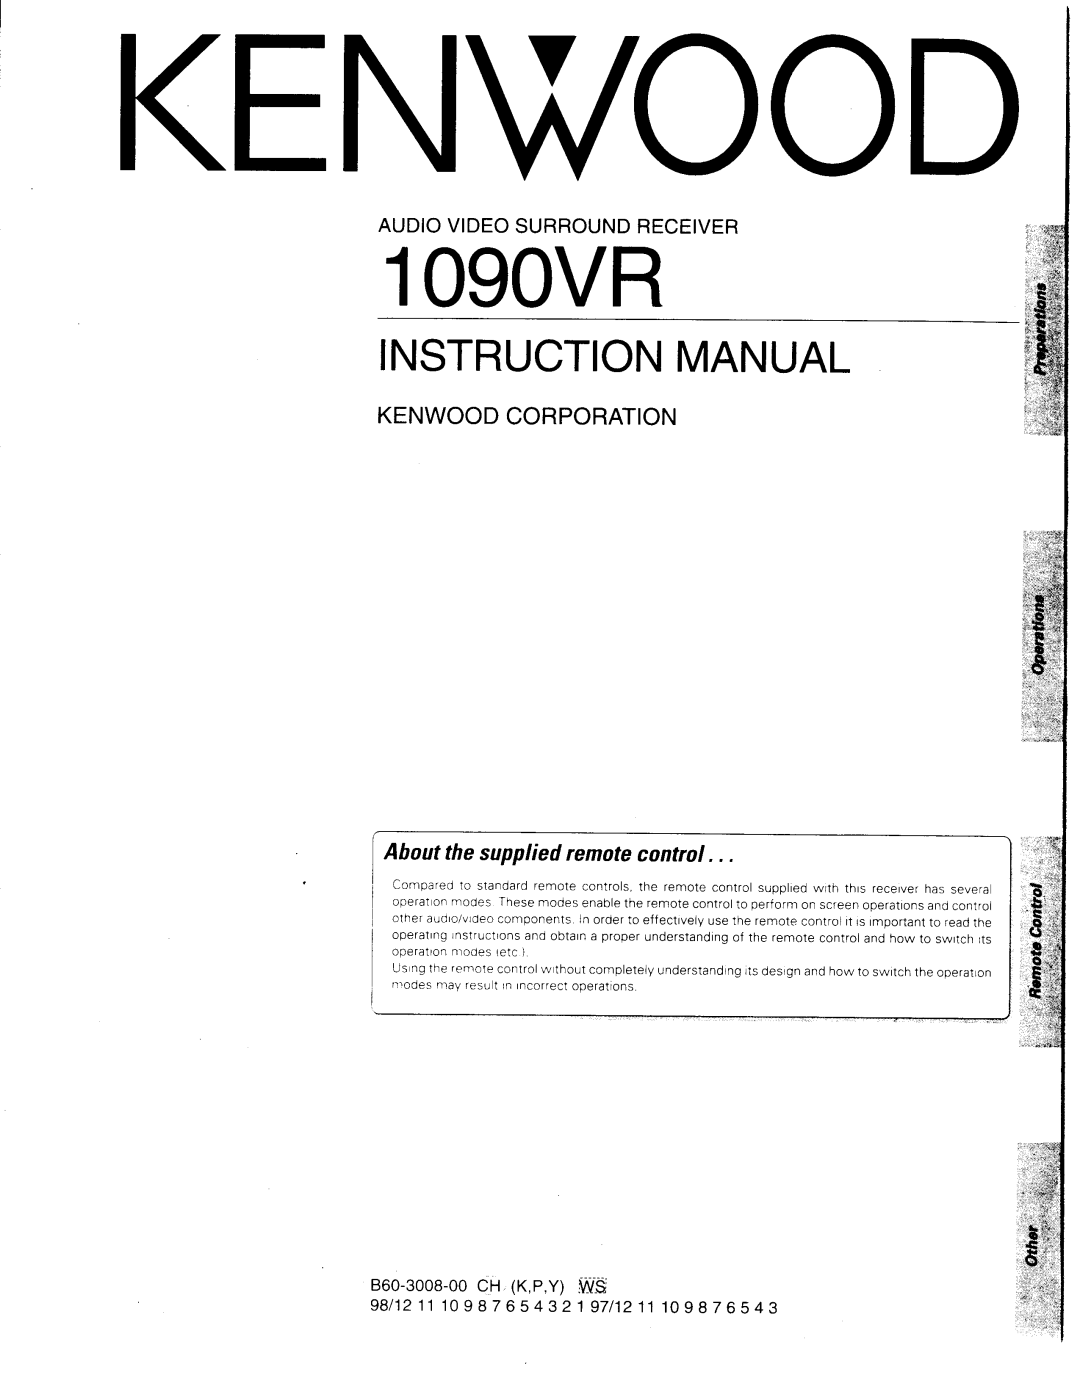 Kenwood 1090VR manual 